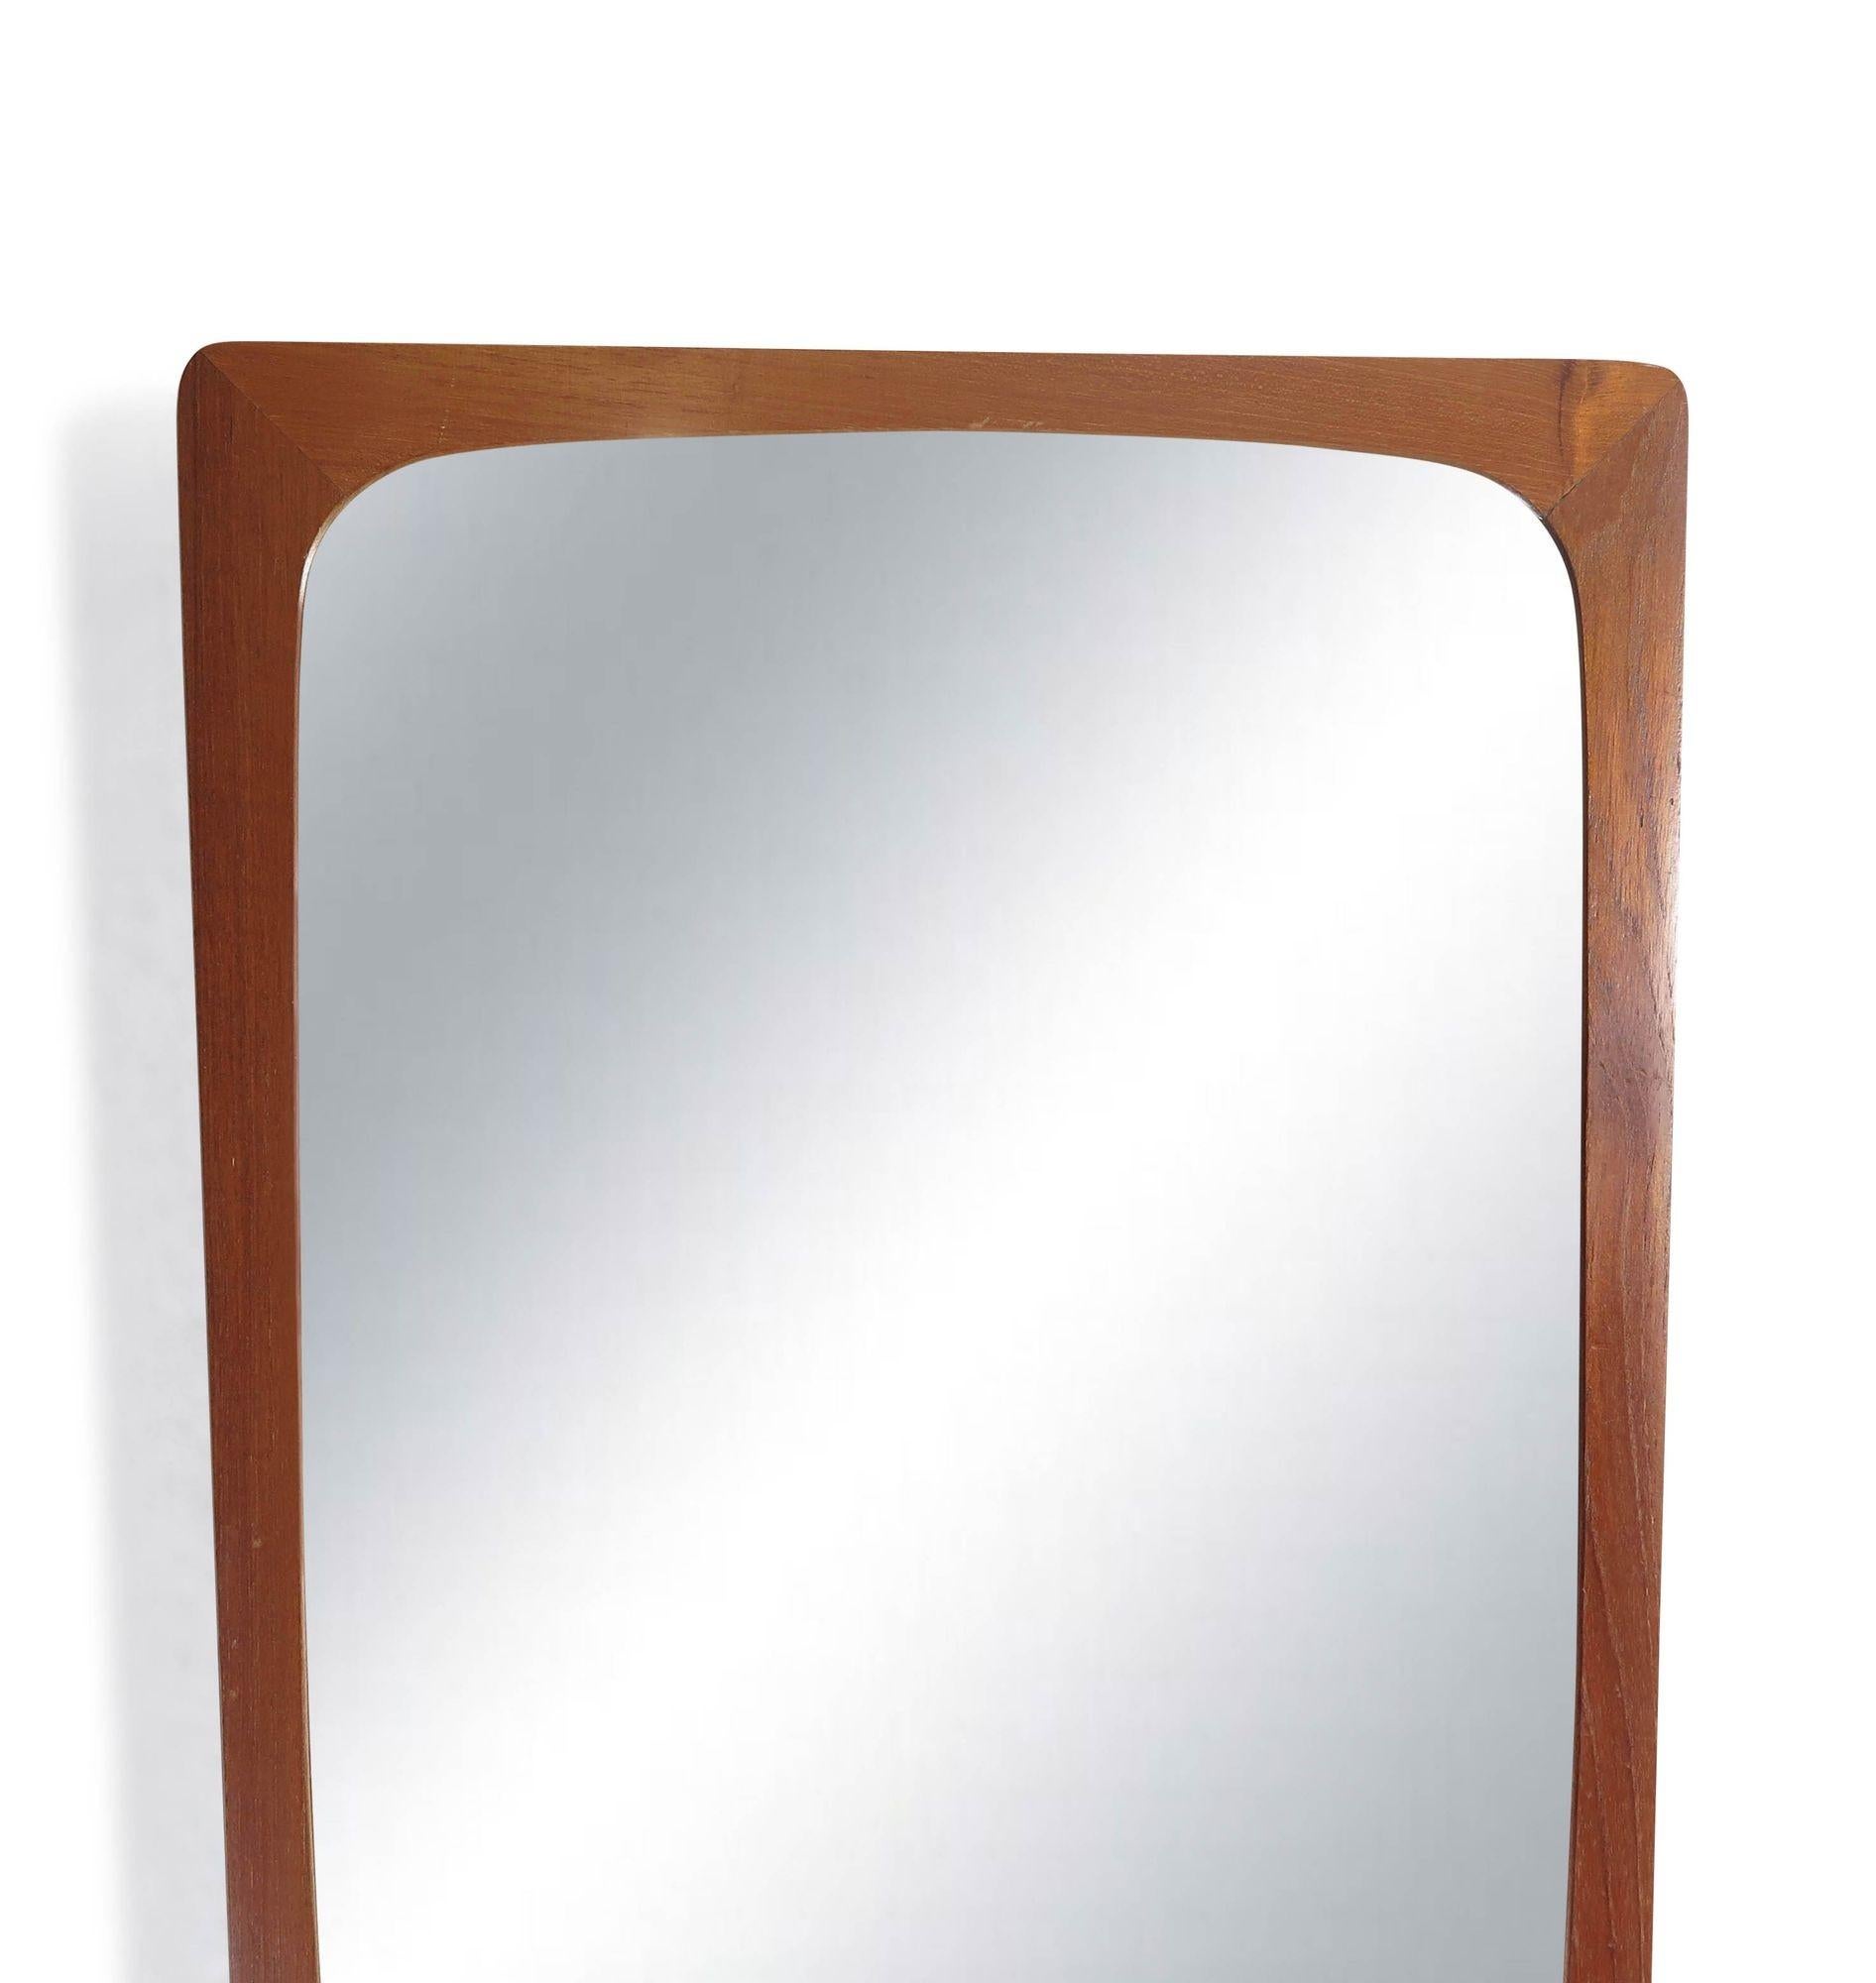 Teak frame mirror, made in Denmark 1965.
Measurements
W 14,75'' x D 0,50'' x H 24,75''